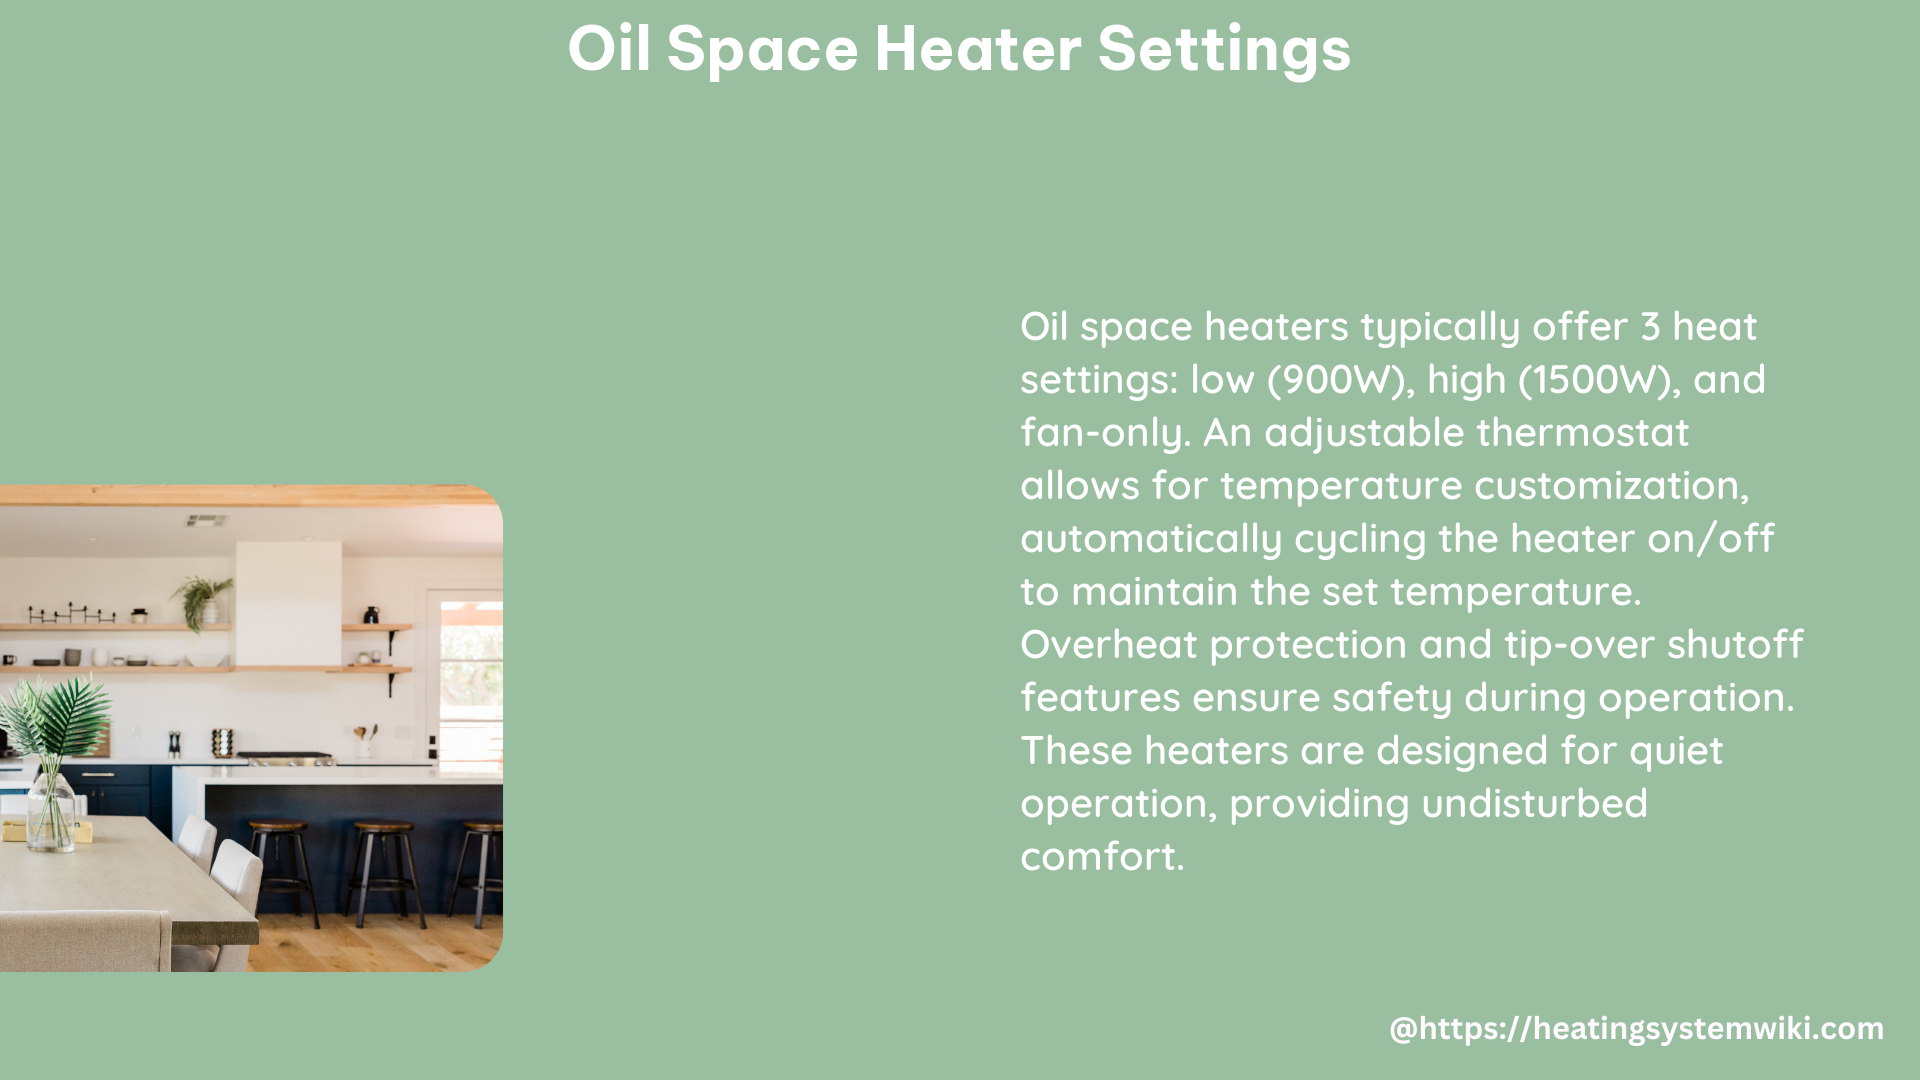 OIl Space Heater Settings